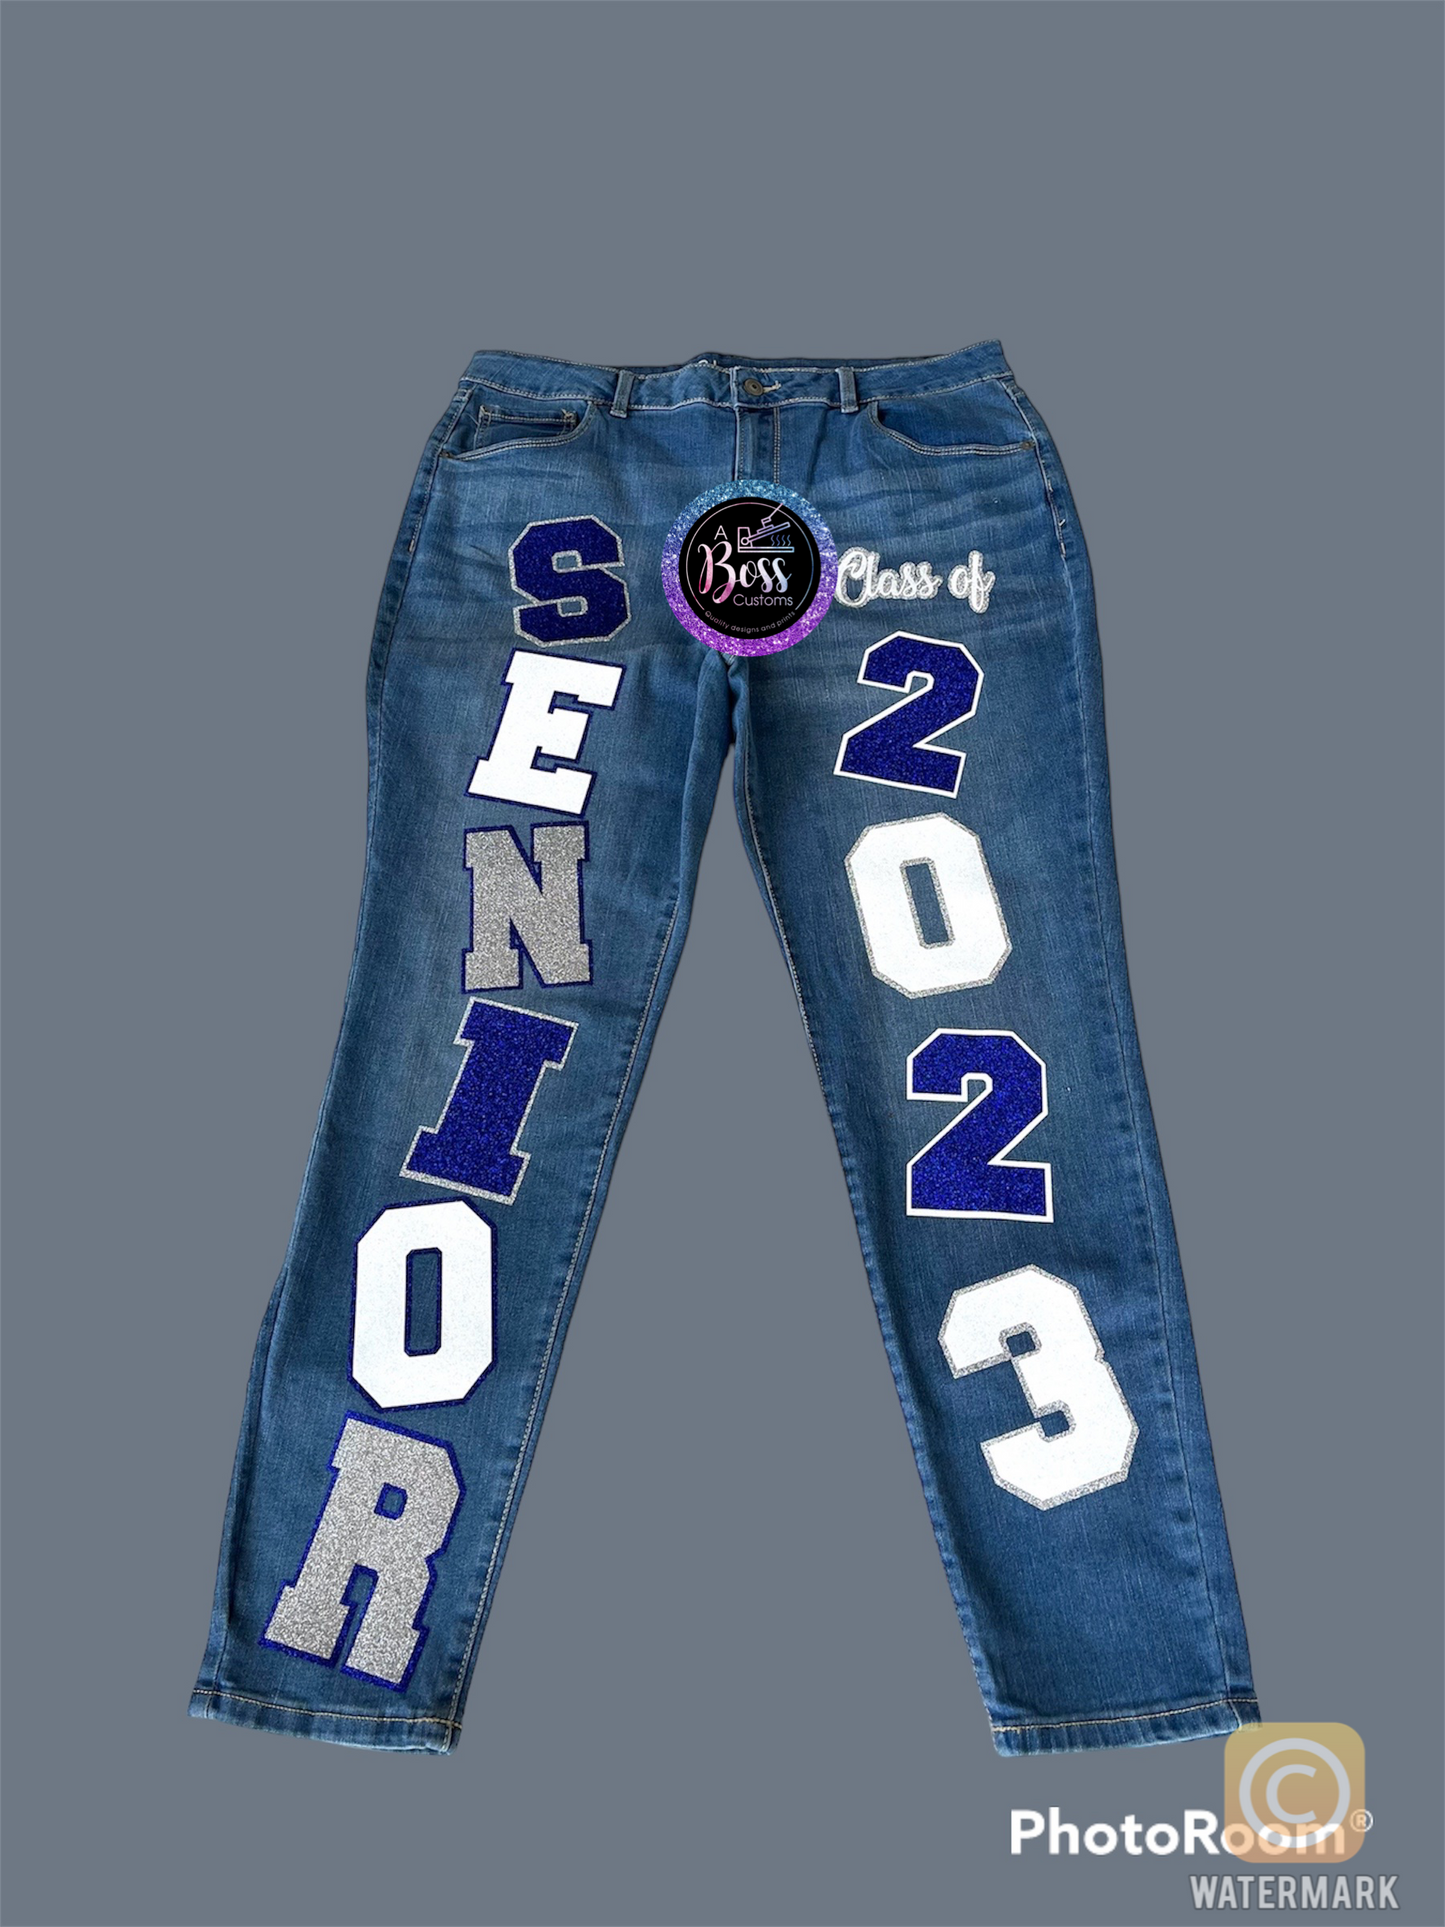 Senior jeans